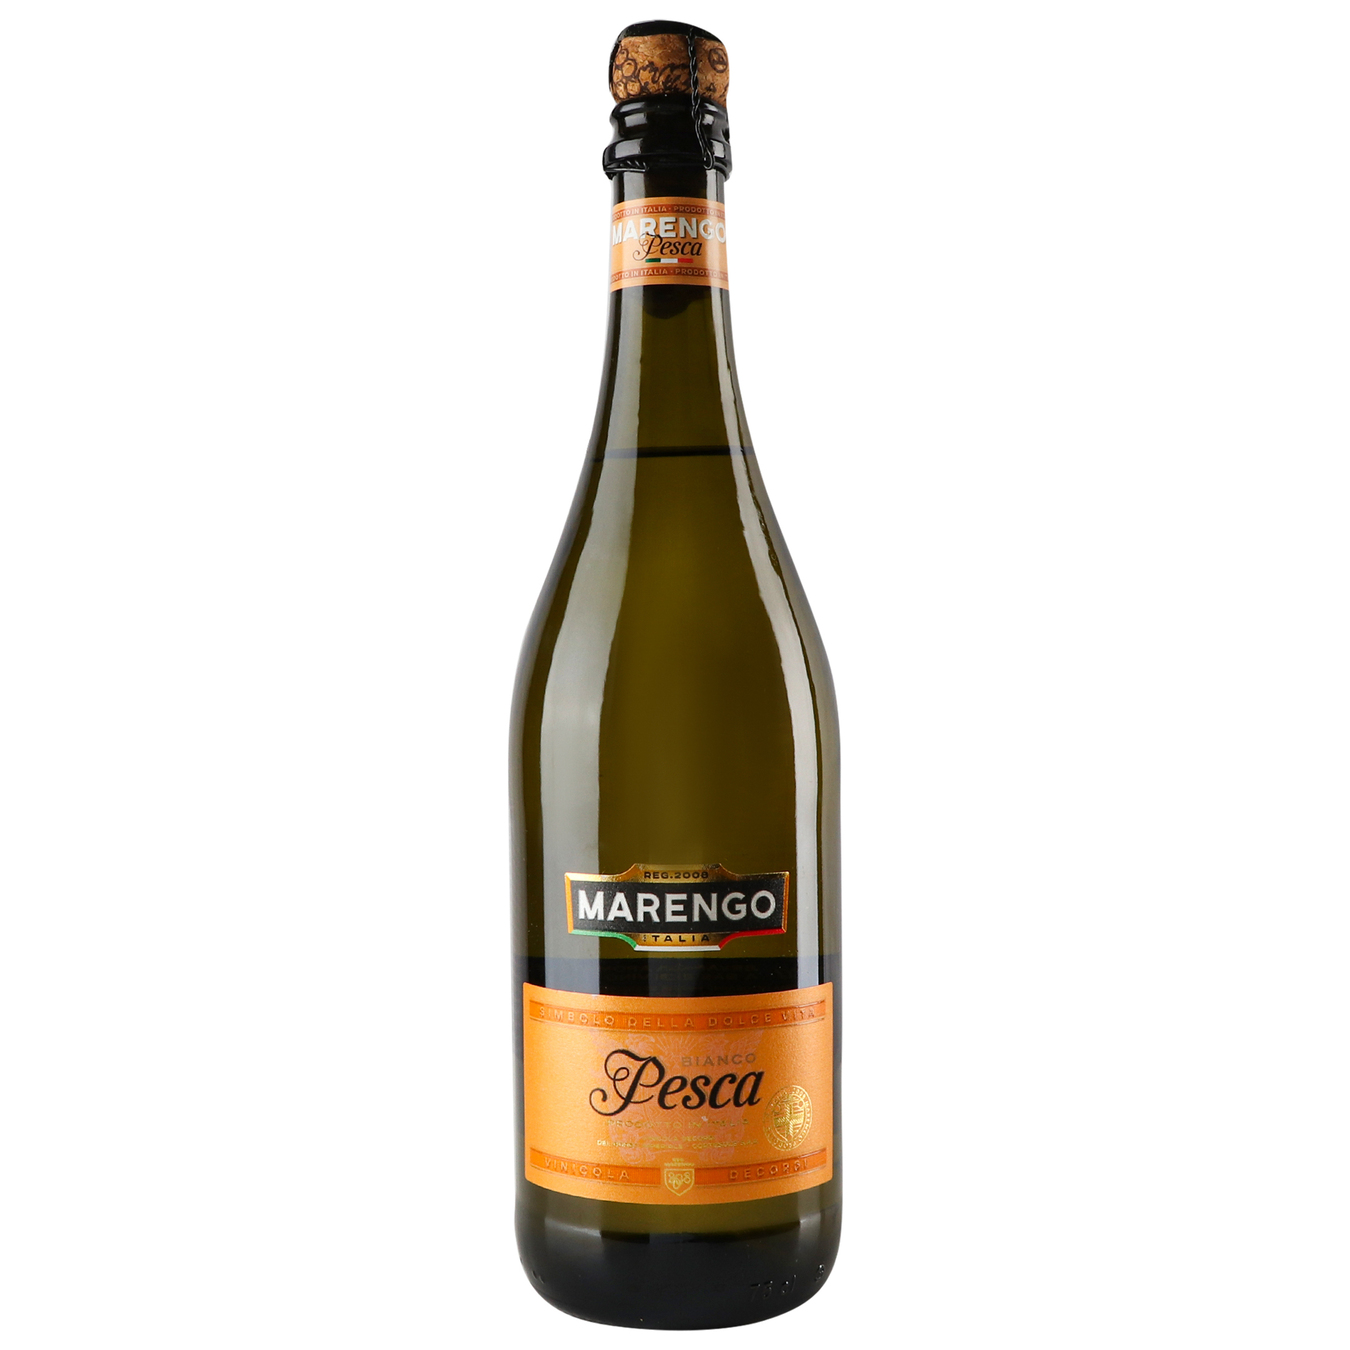 Sparkling wine drink Marengo Fragolino white semi-sweet 7.5% 0.75l